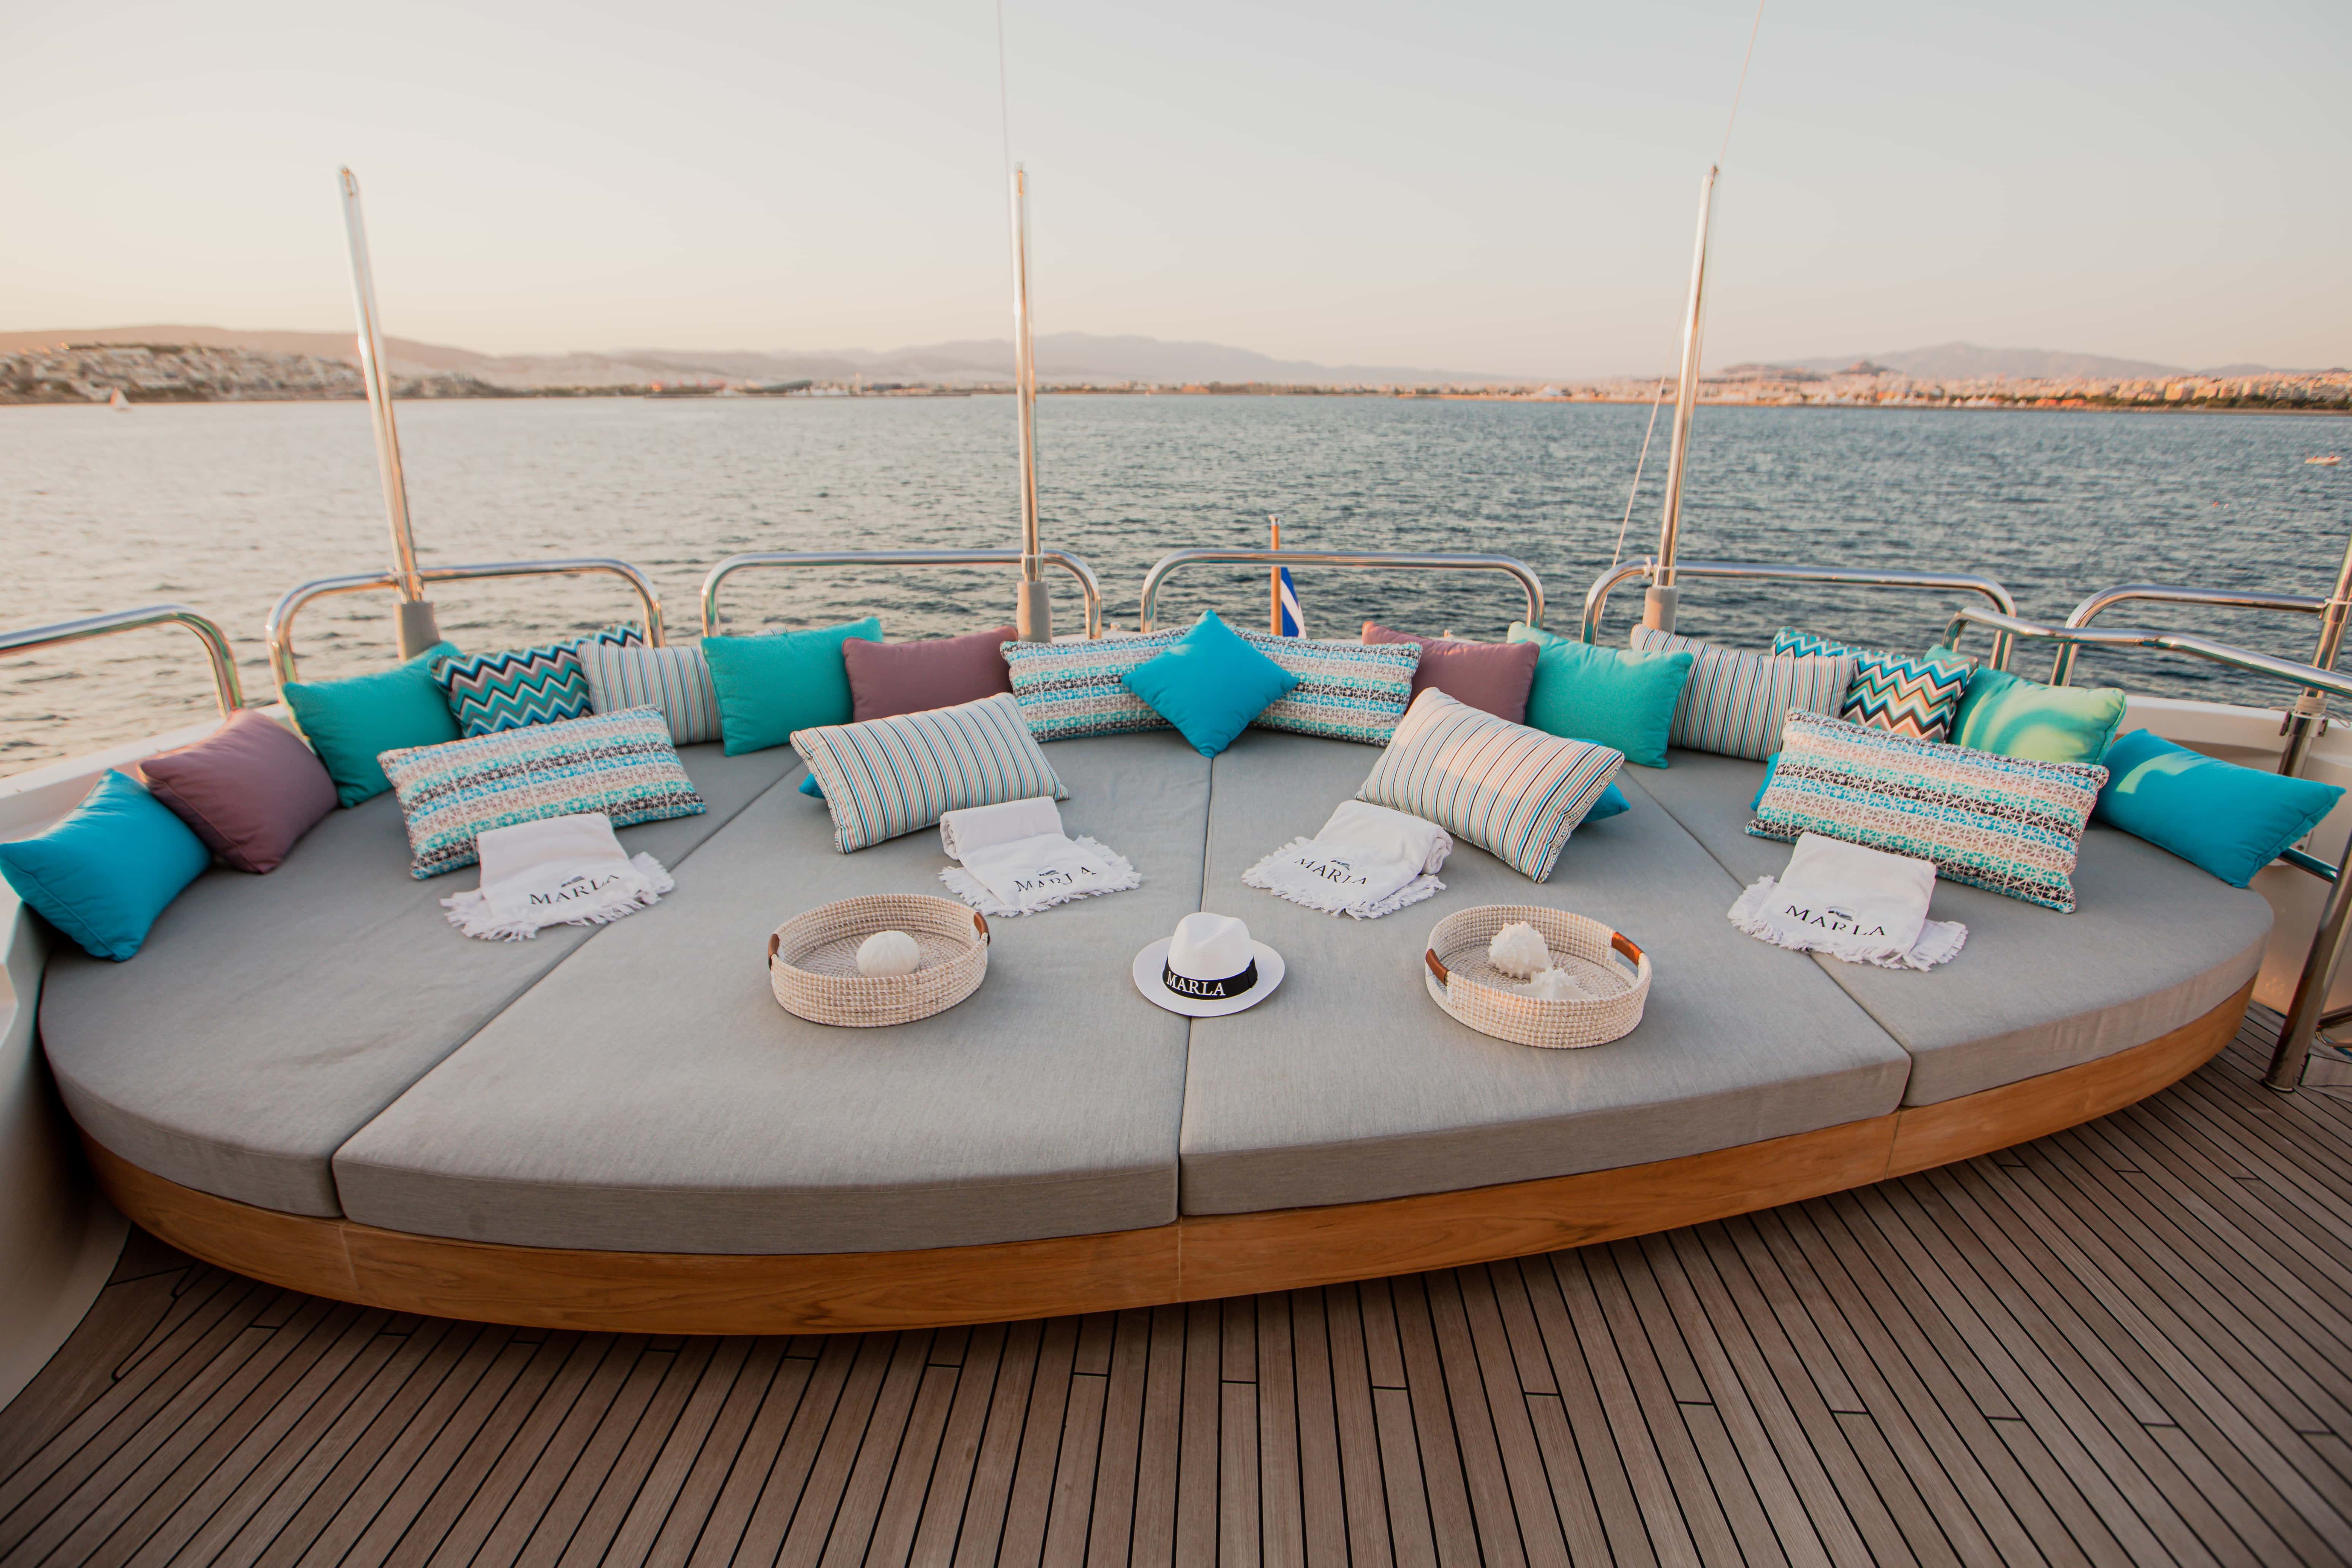 weekly superyacht rental Greece, weekly superyacht rentals Greece